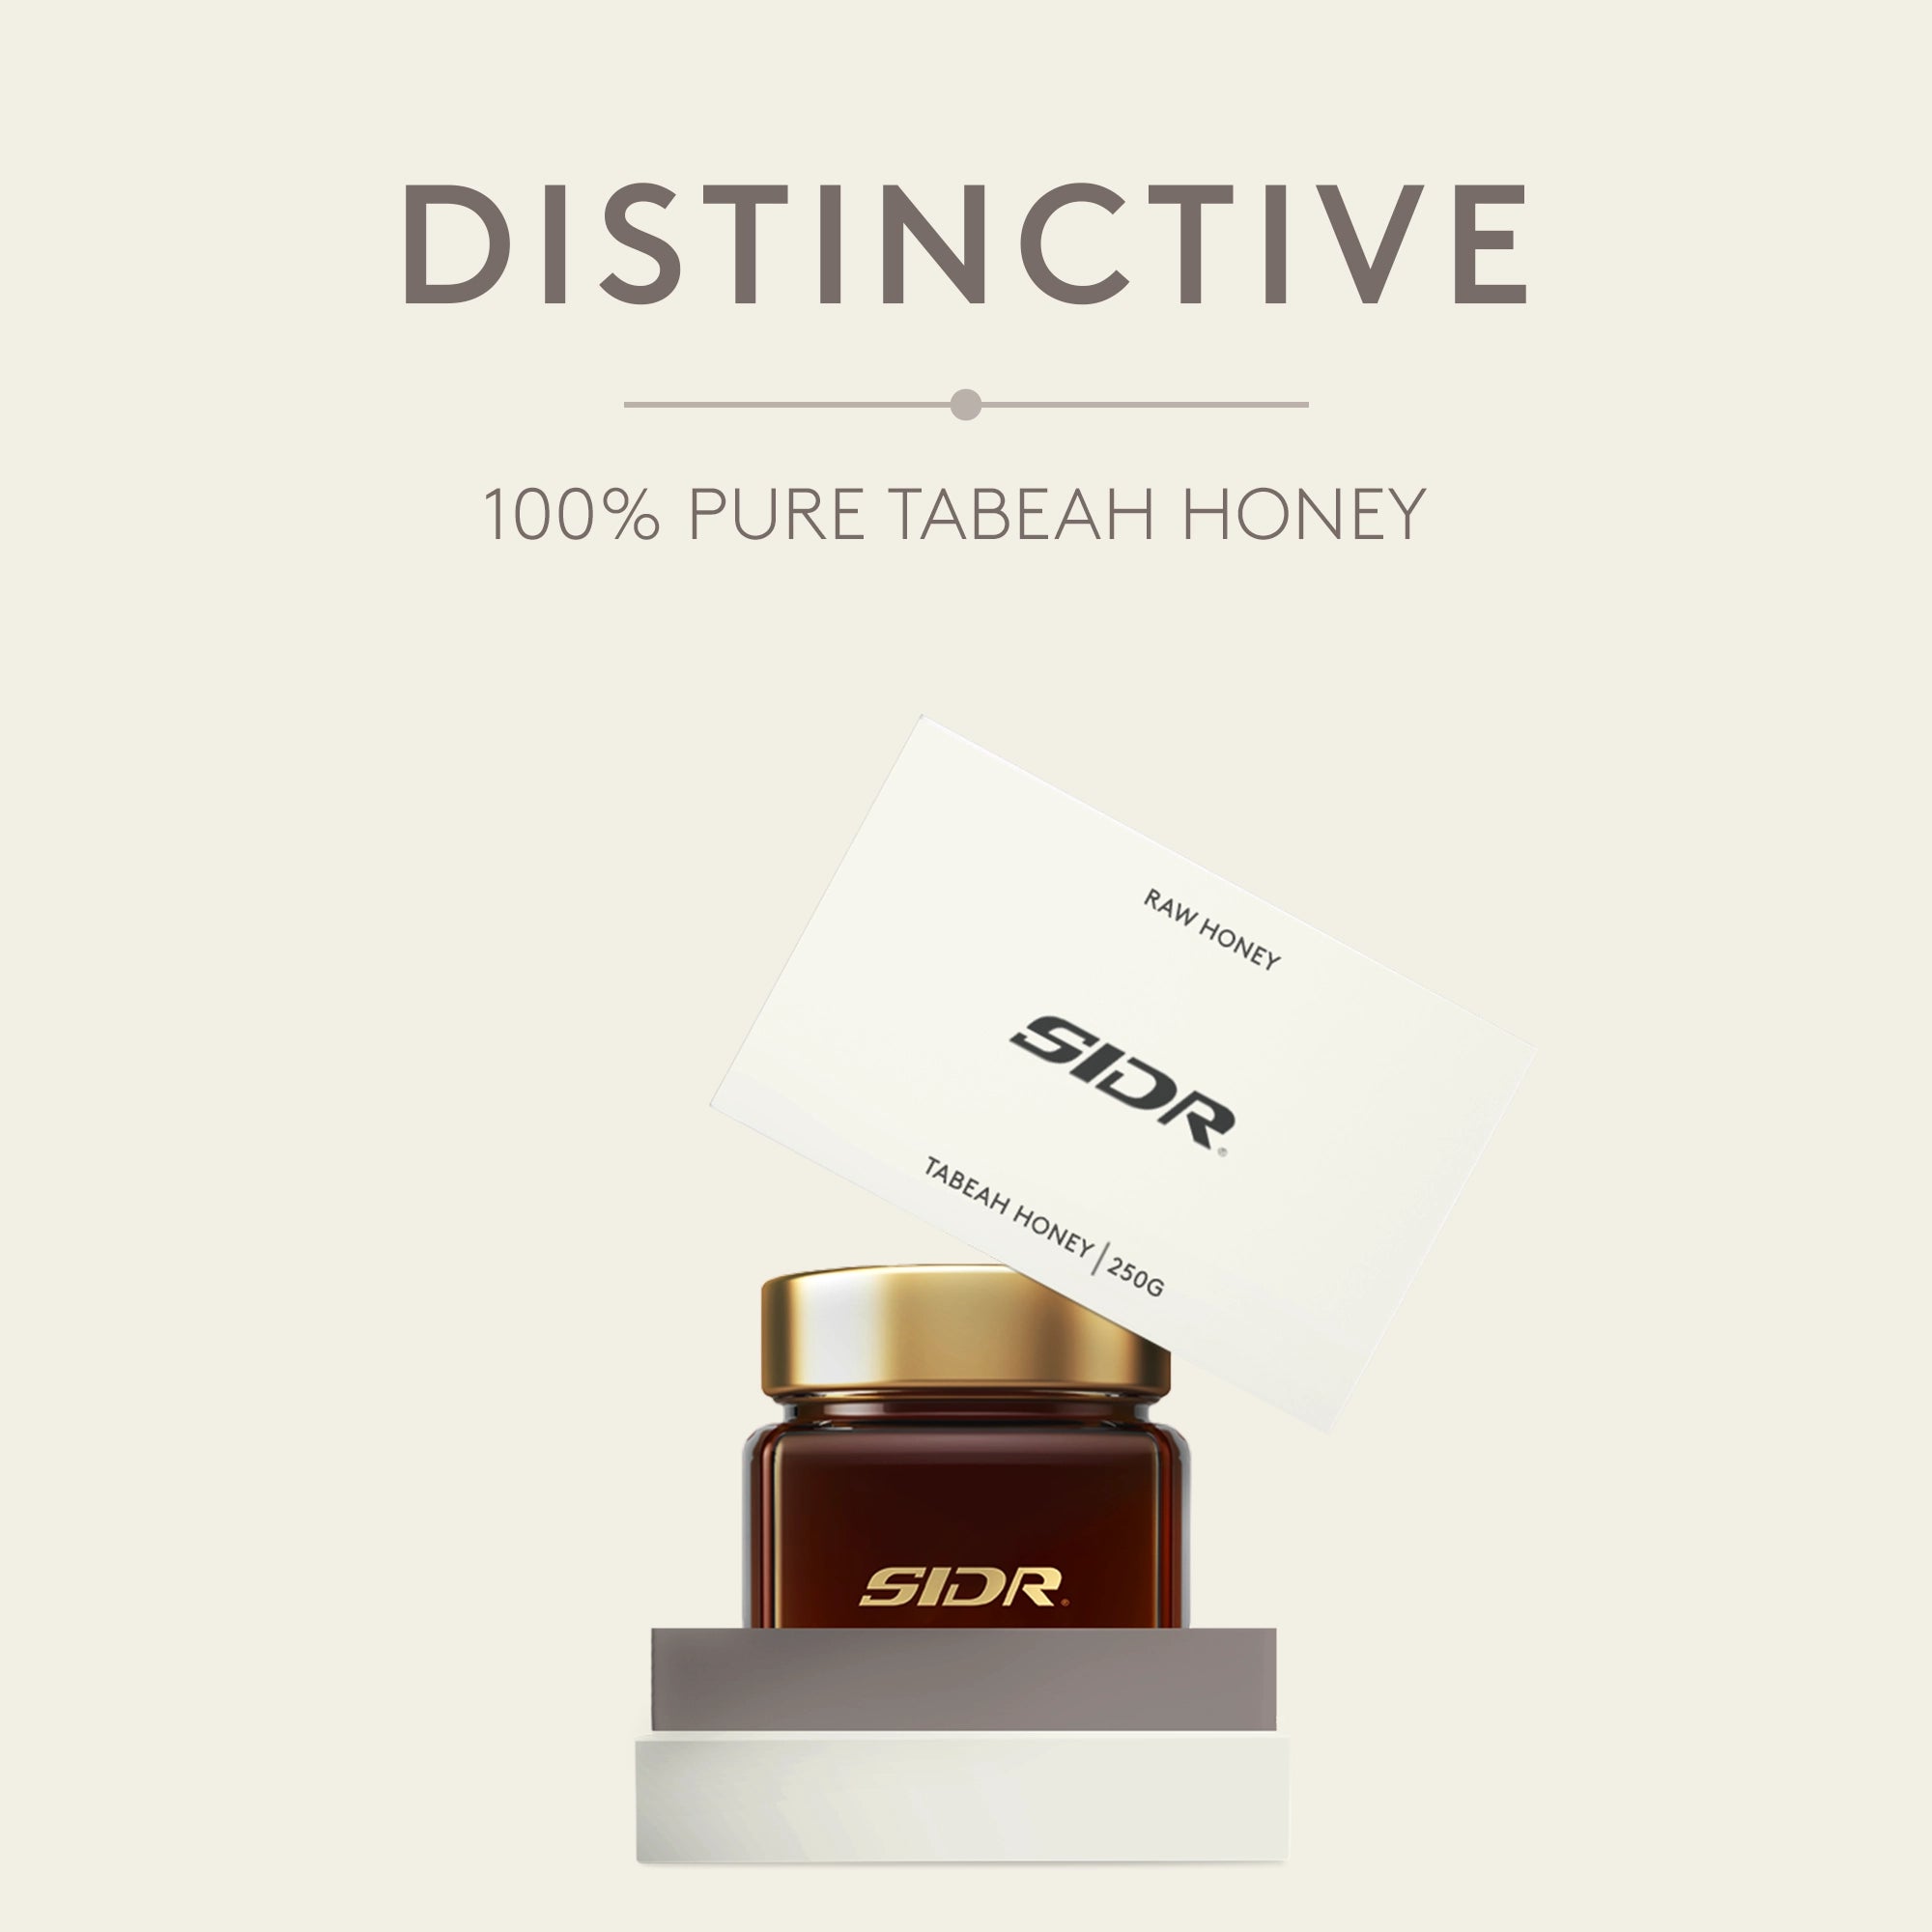 sidr tabeah honey distinctive